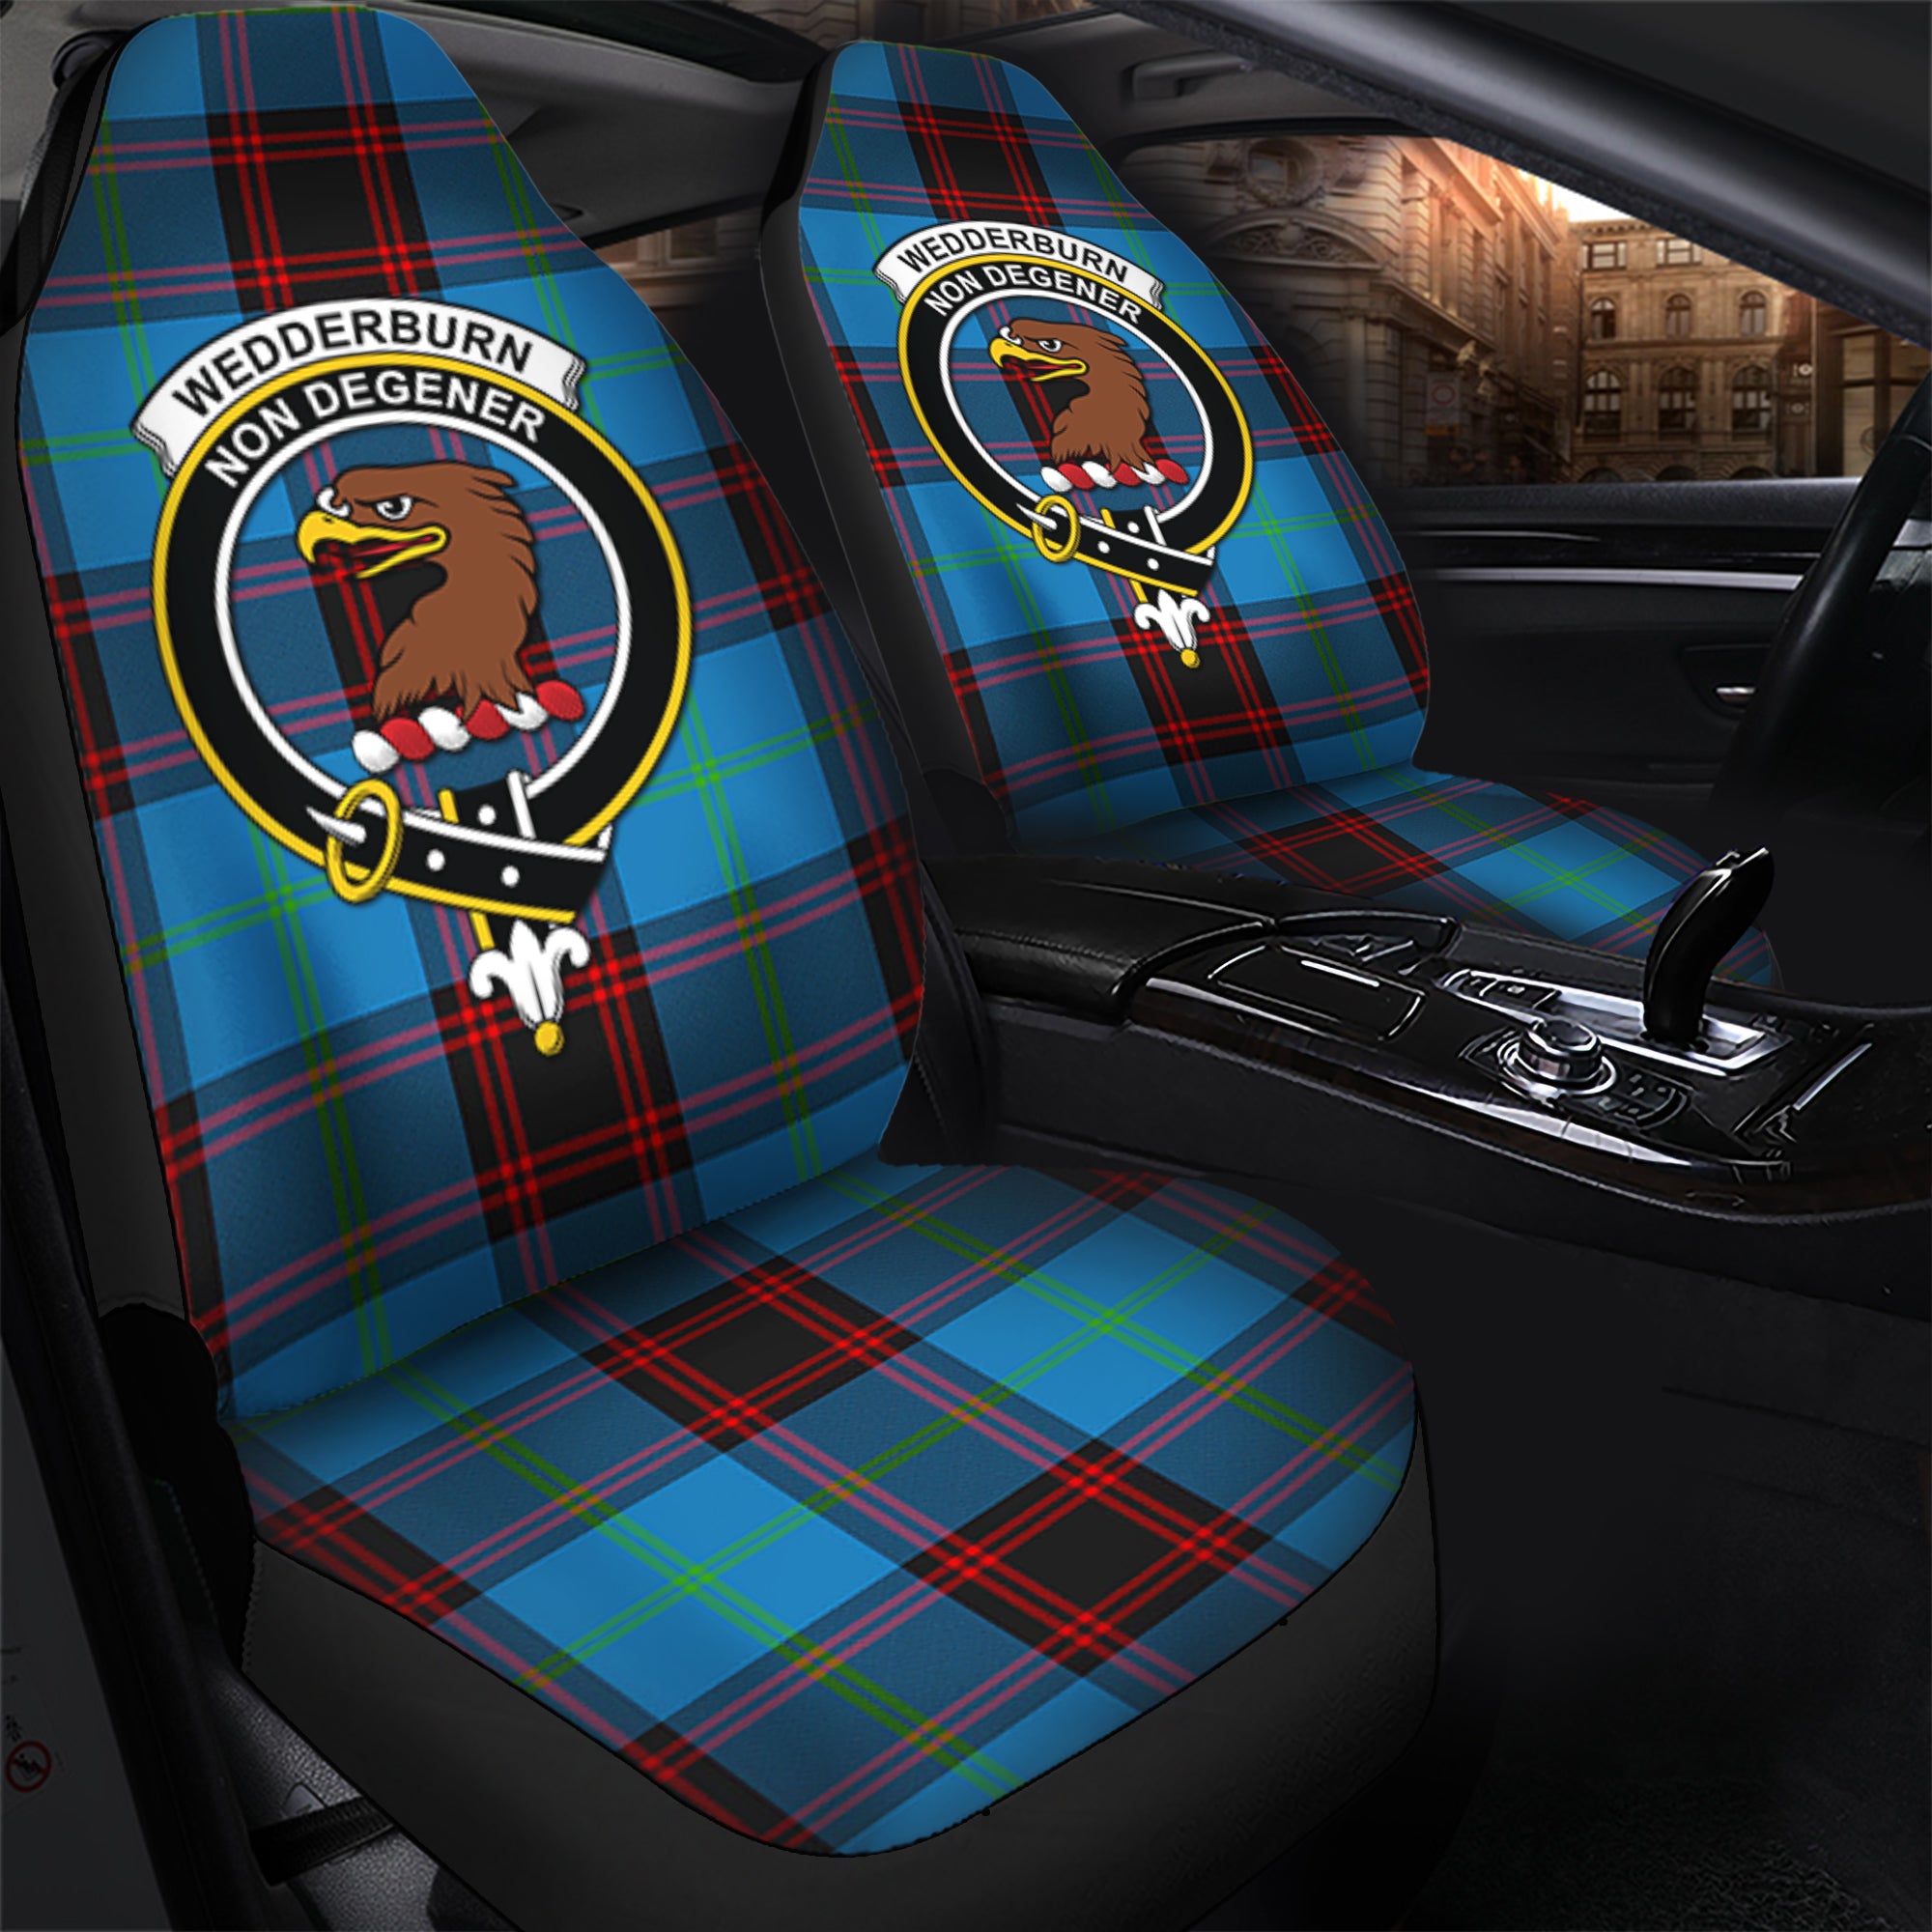 Wedderburn Clan Tartan Car Seat Cover, Family Crest Tartan Seat Cover TS23